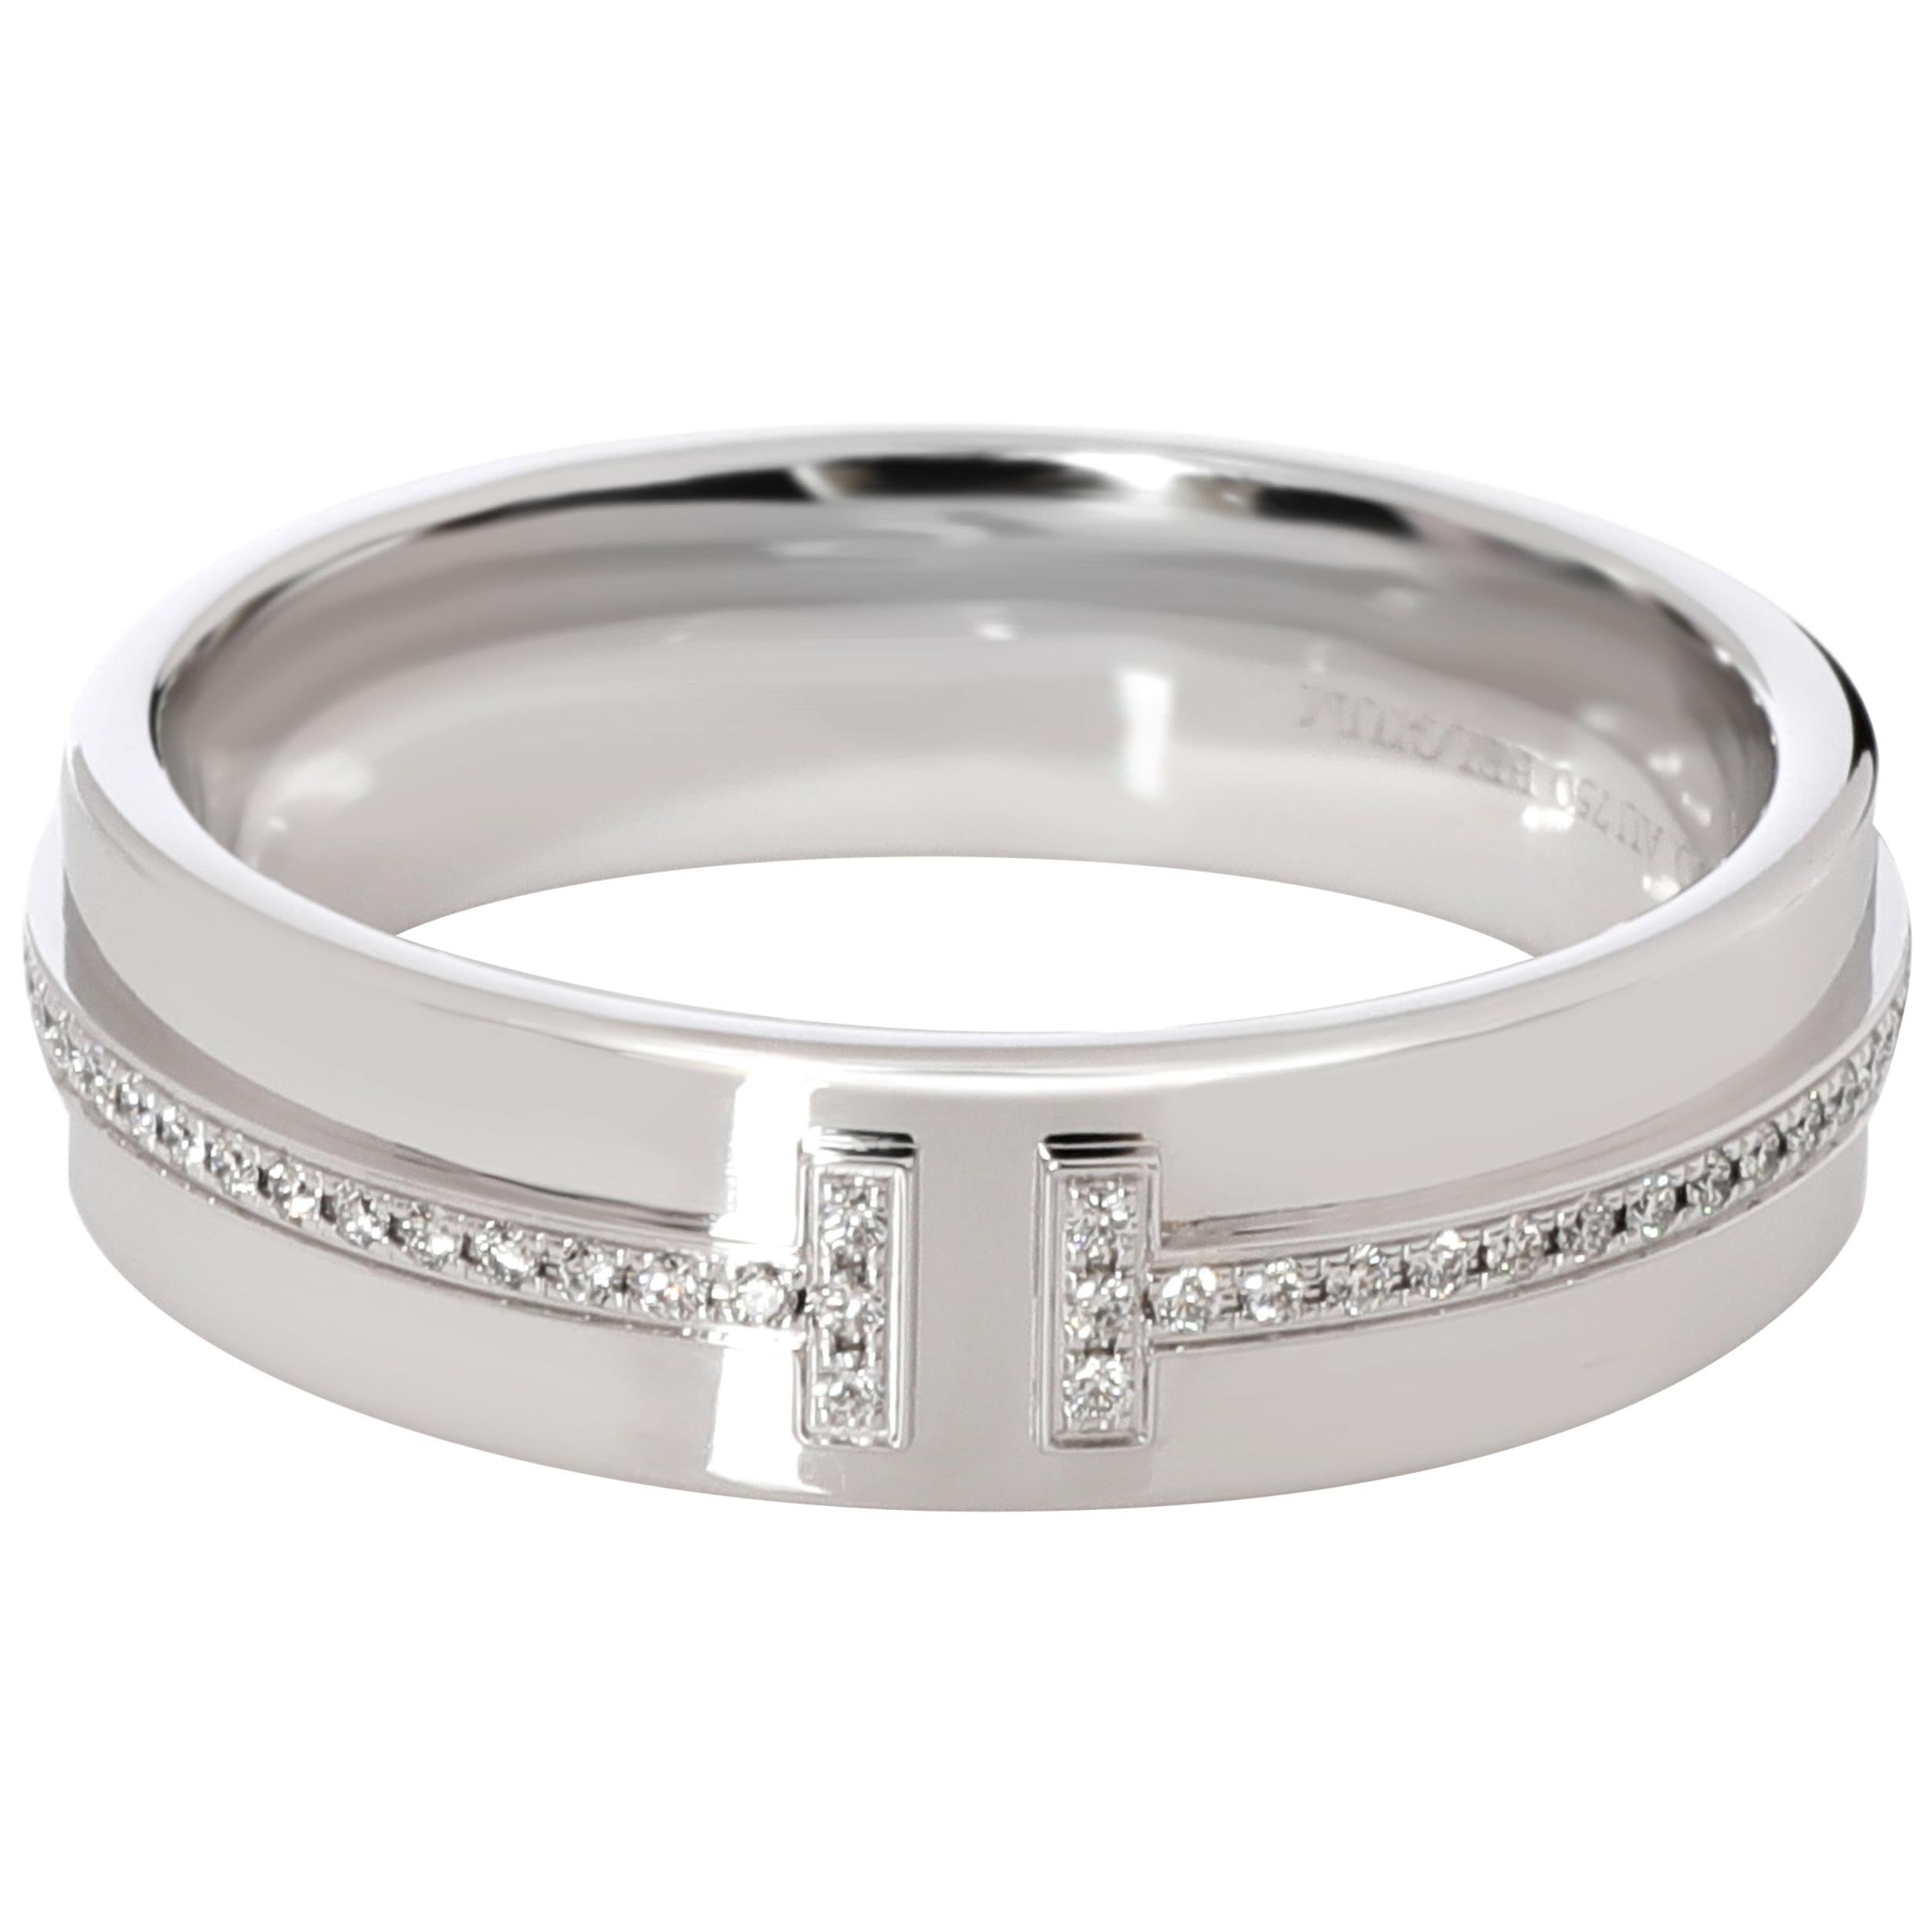 Tiffany & Co. T Wide Diamond Ring in 18 Karat White Gold 0.12 Carat